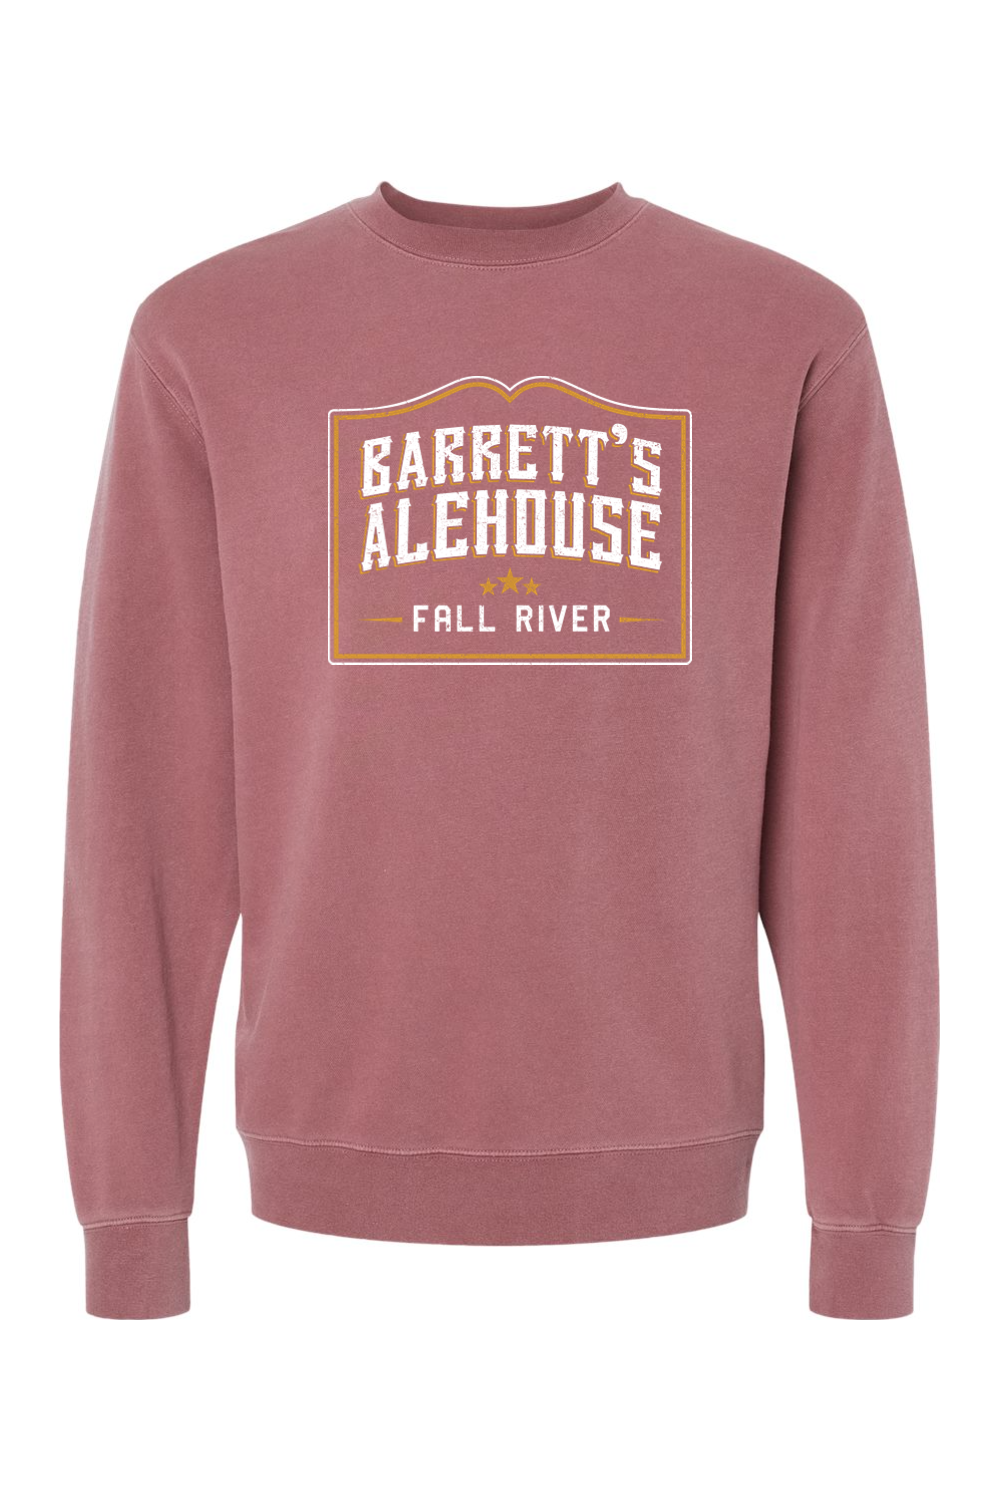 Barrett's Alehouse Pigment-Dyed Crewneck Sweatshirt